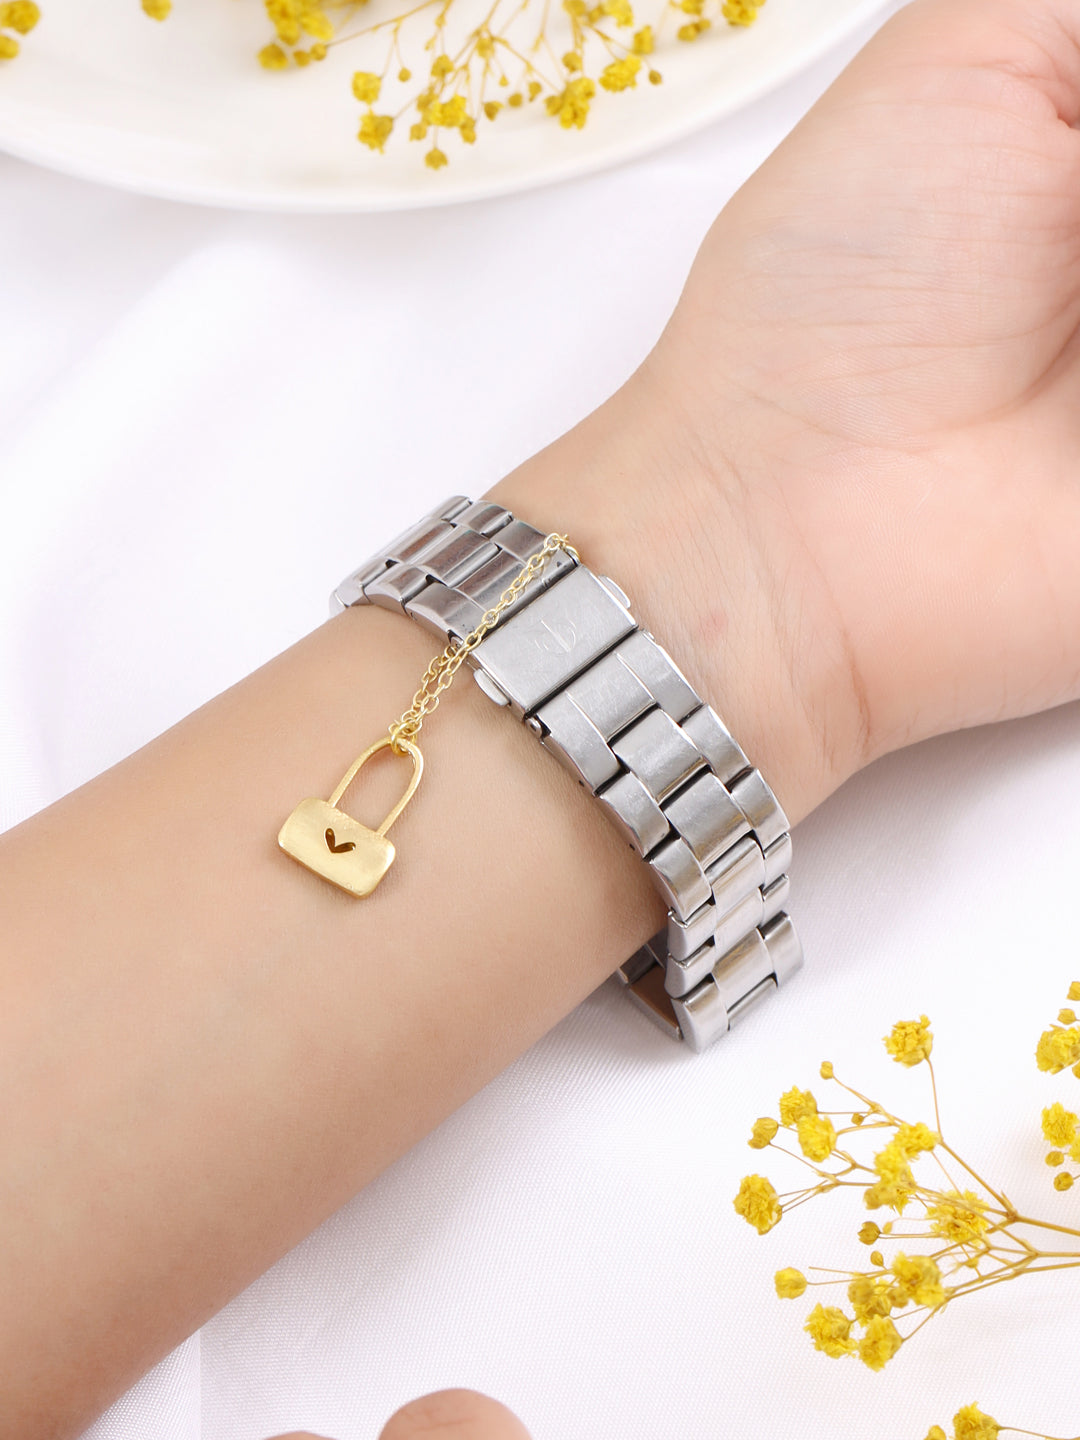 Heart Lock Watch Chain Charm - Golden